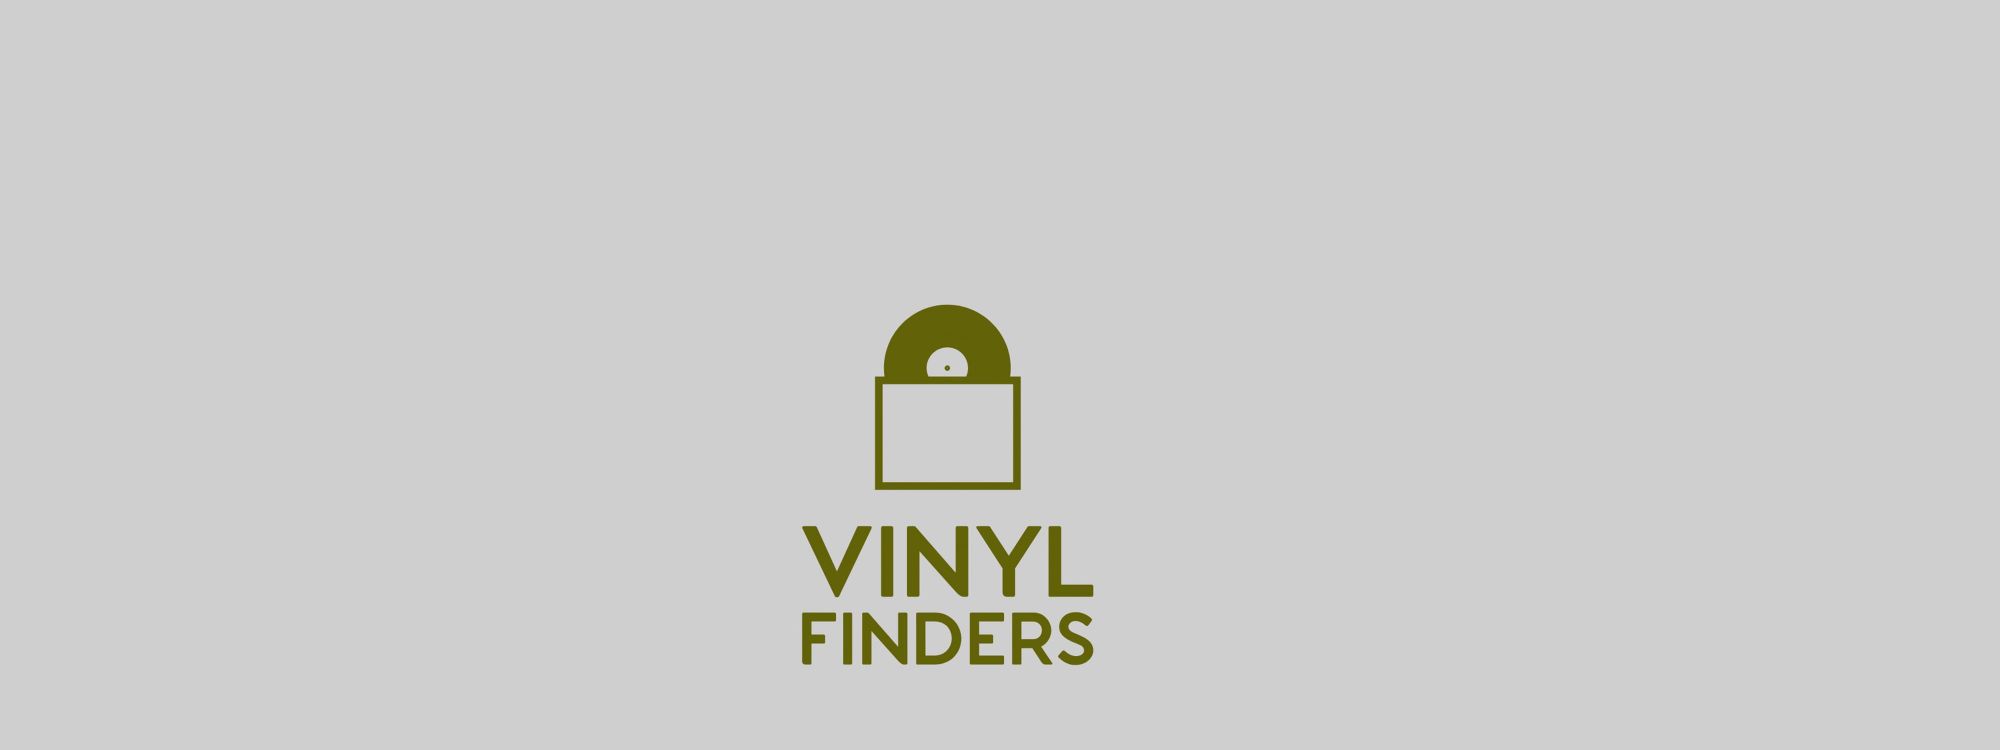 vinyl_finders_hero (1)